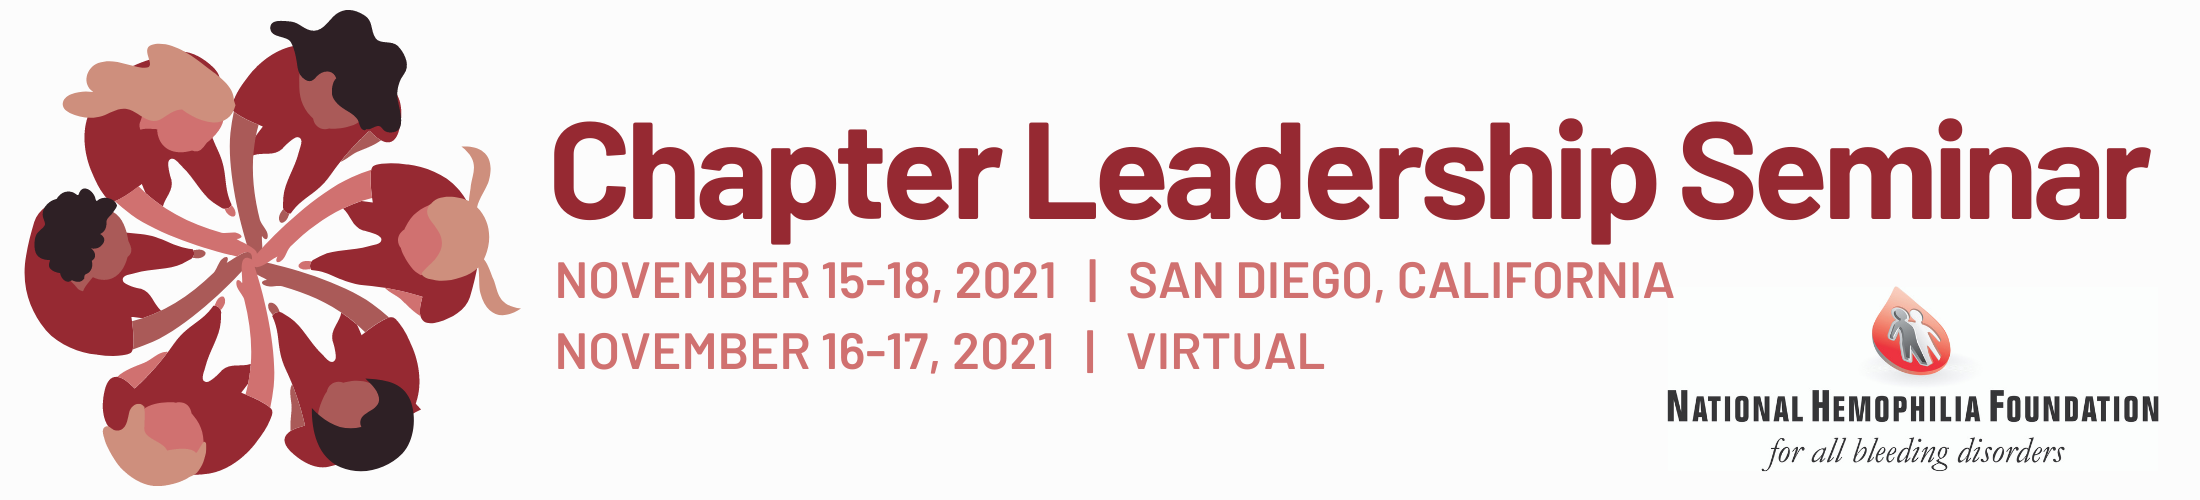 2021 Chapter Leadership Seminar banner